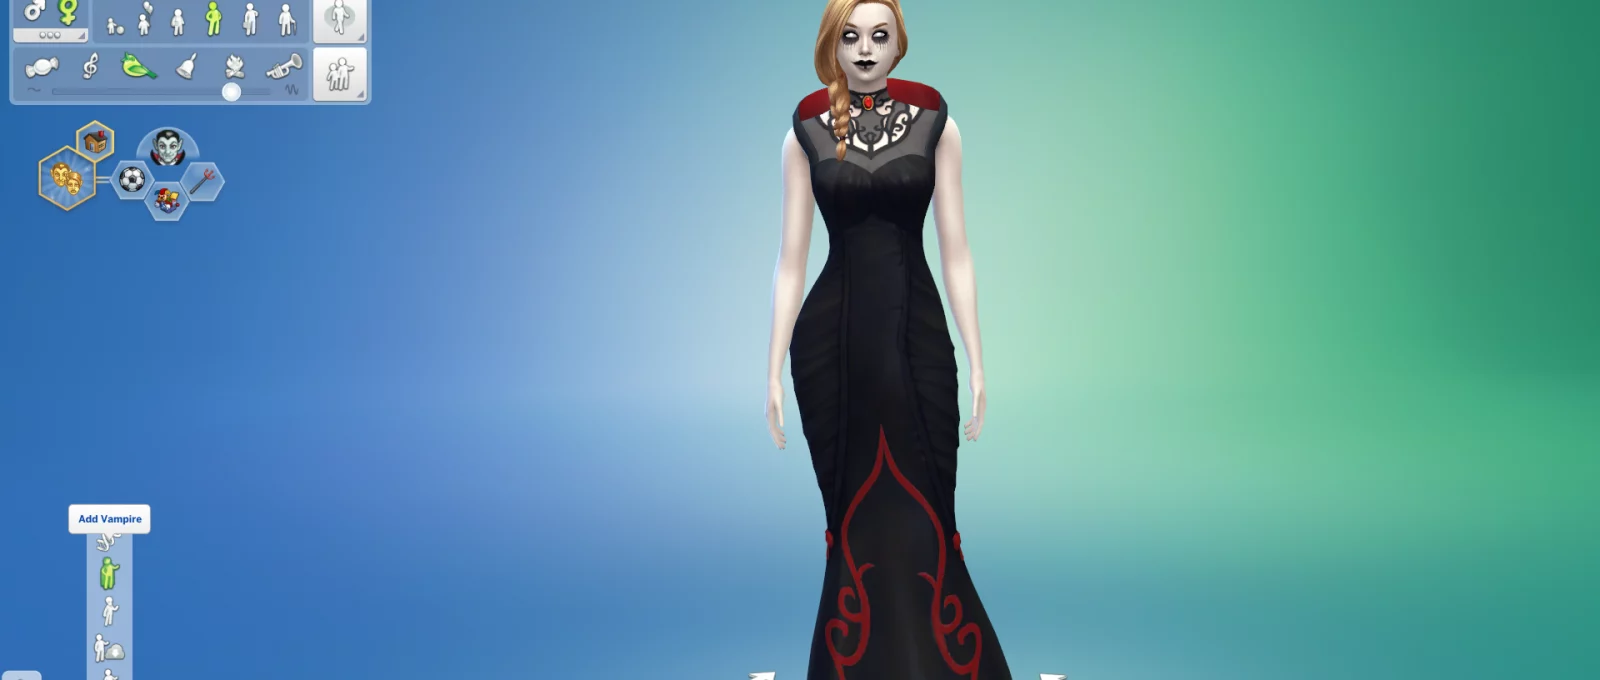 Sims 4 Vampire Cheats Guide